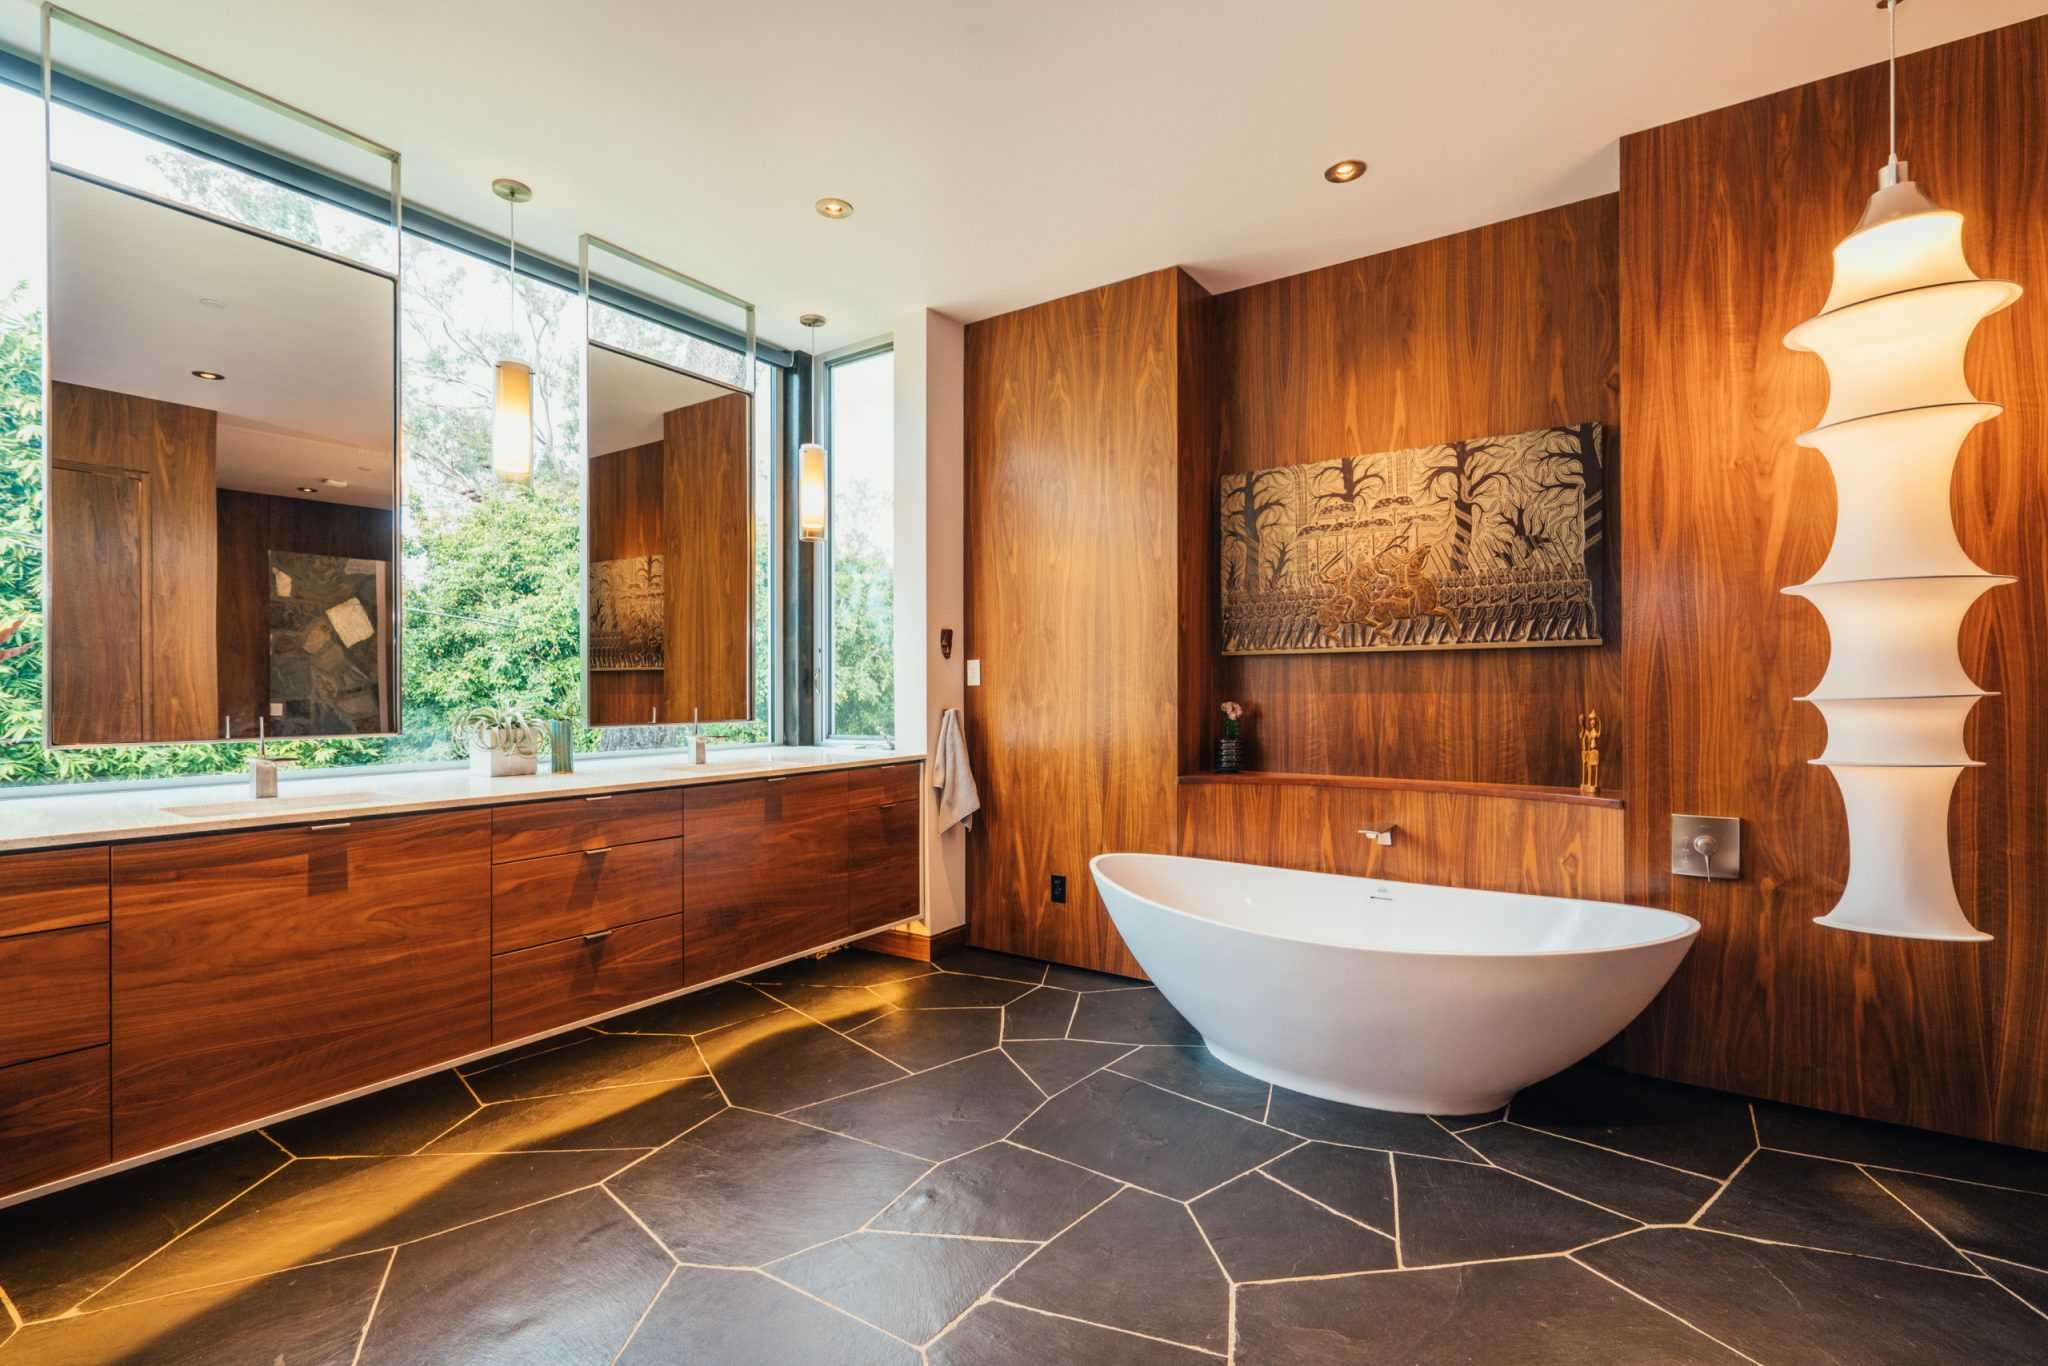 20 Impressive Mid Century Modern Bathroom Designs You Must See 2 2048x1366 